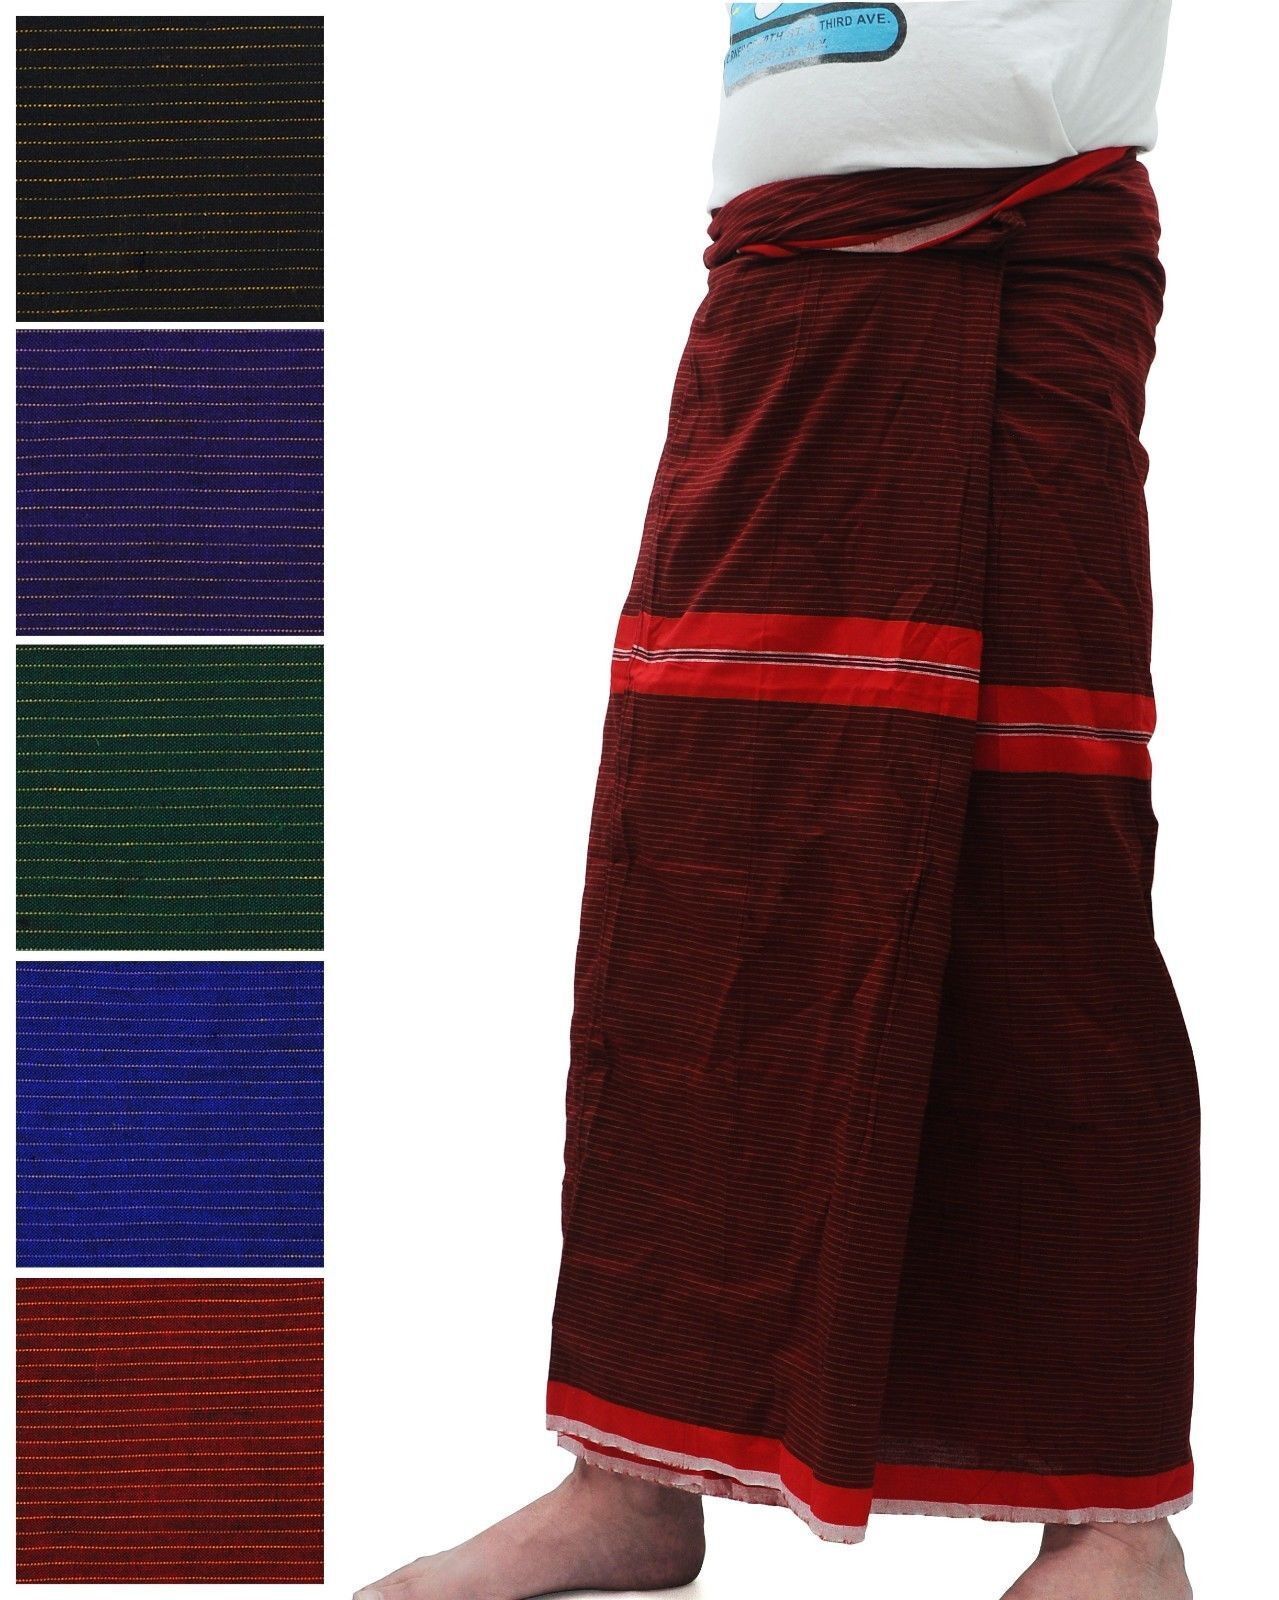 Burmese Pants Longyi Myanmar Sarong Pareo Traditional Dress Handmade Socail Enterprise Made All Colors